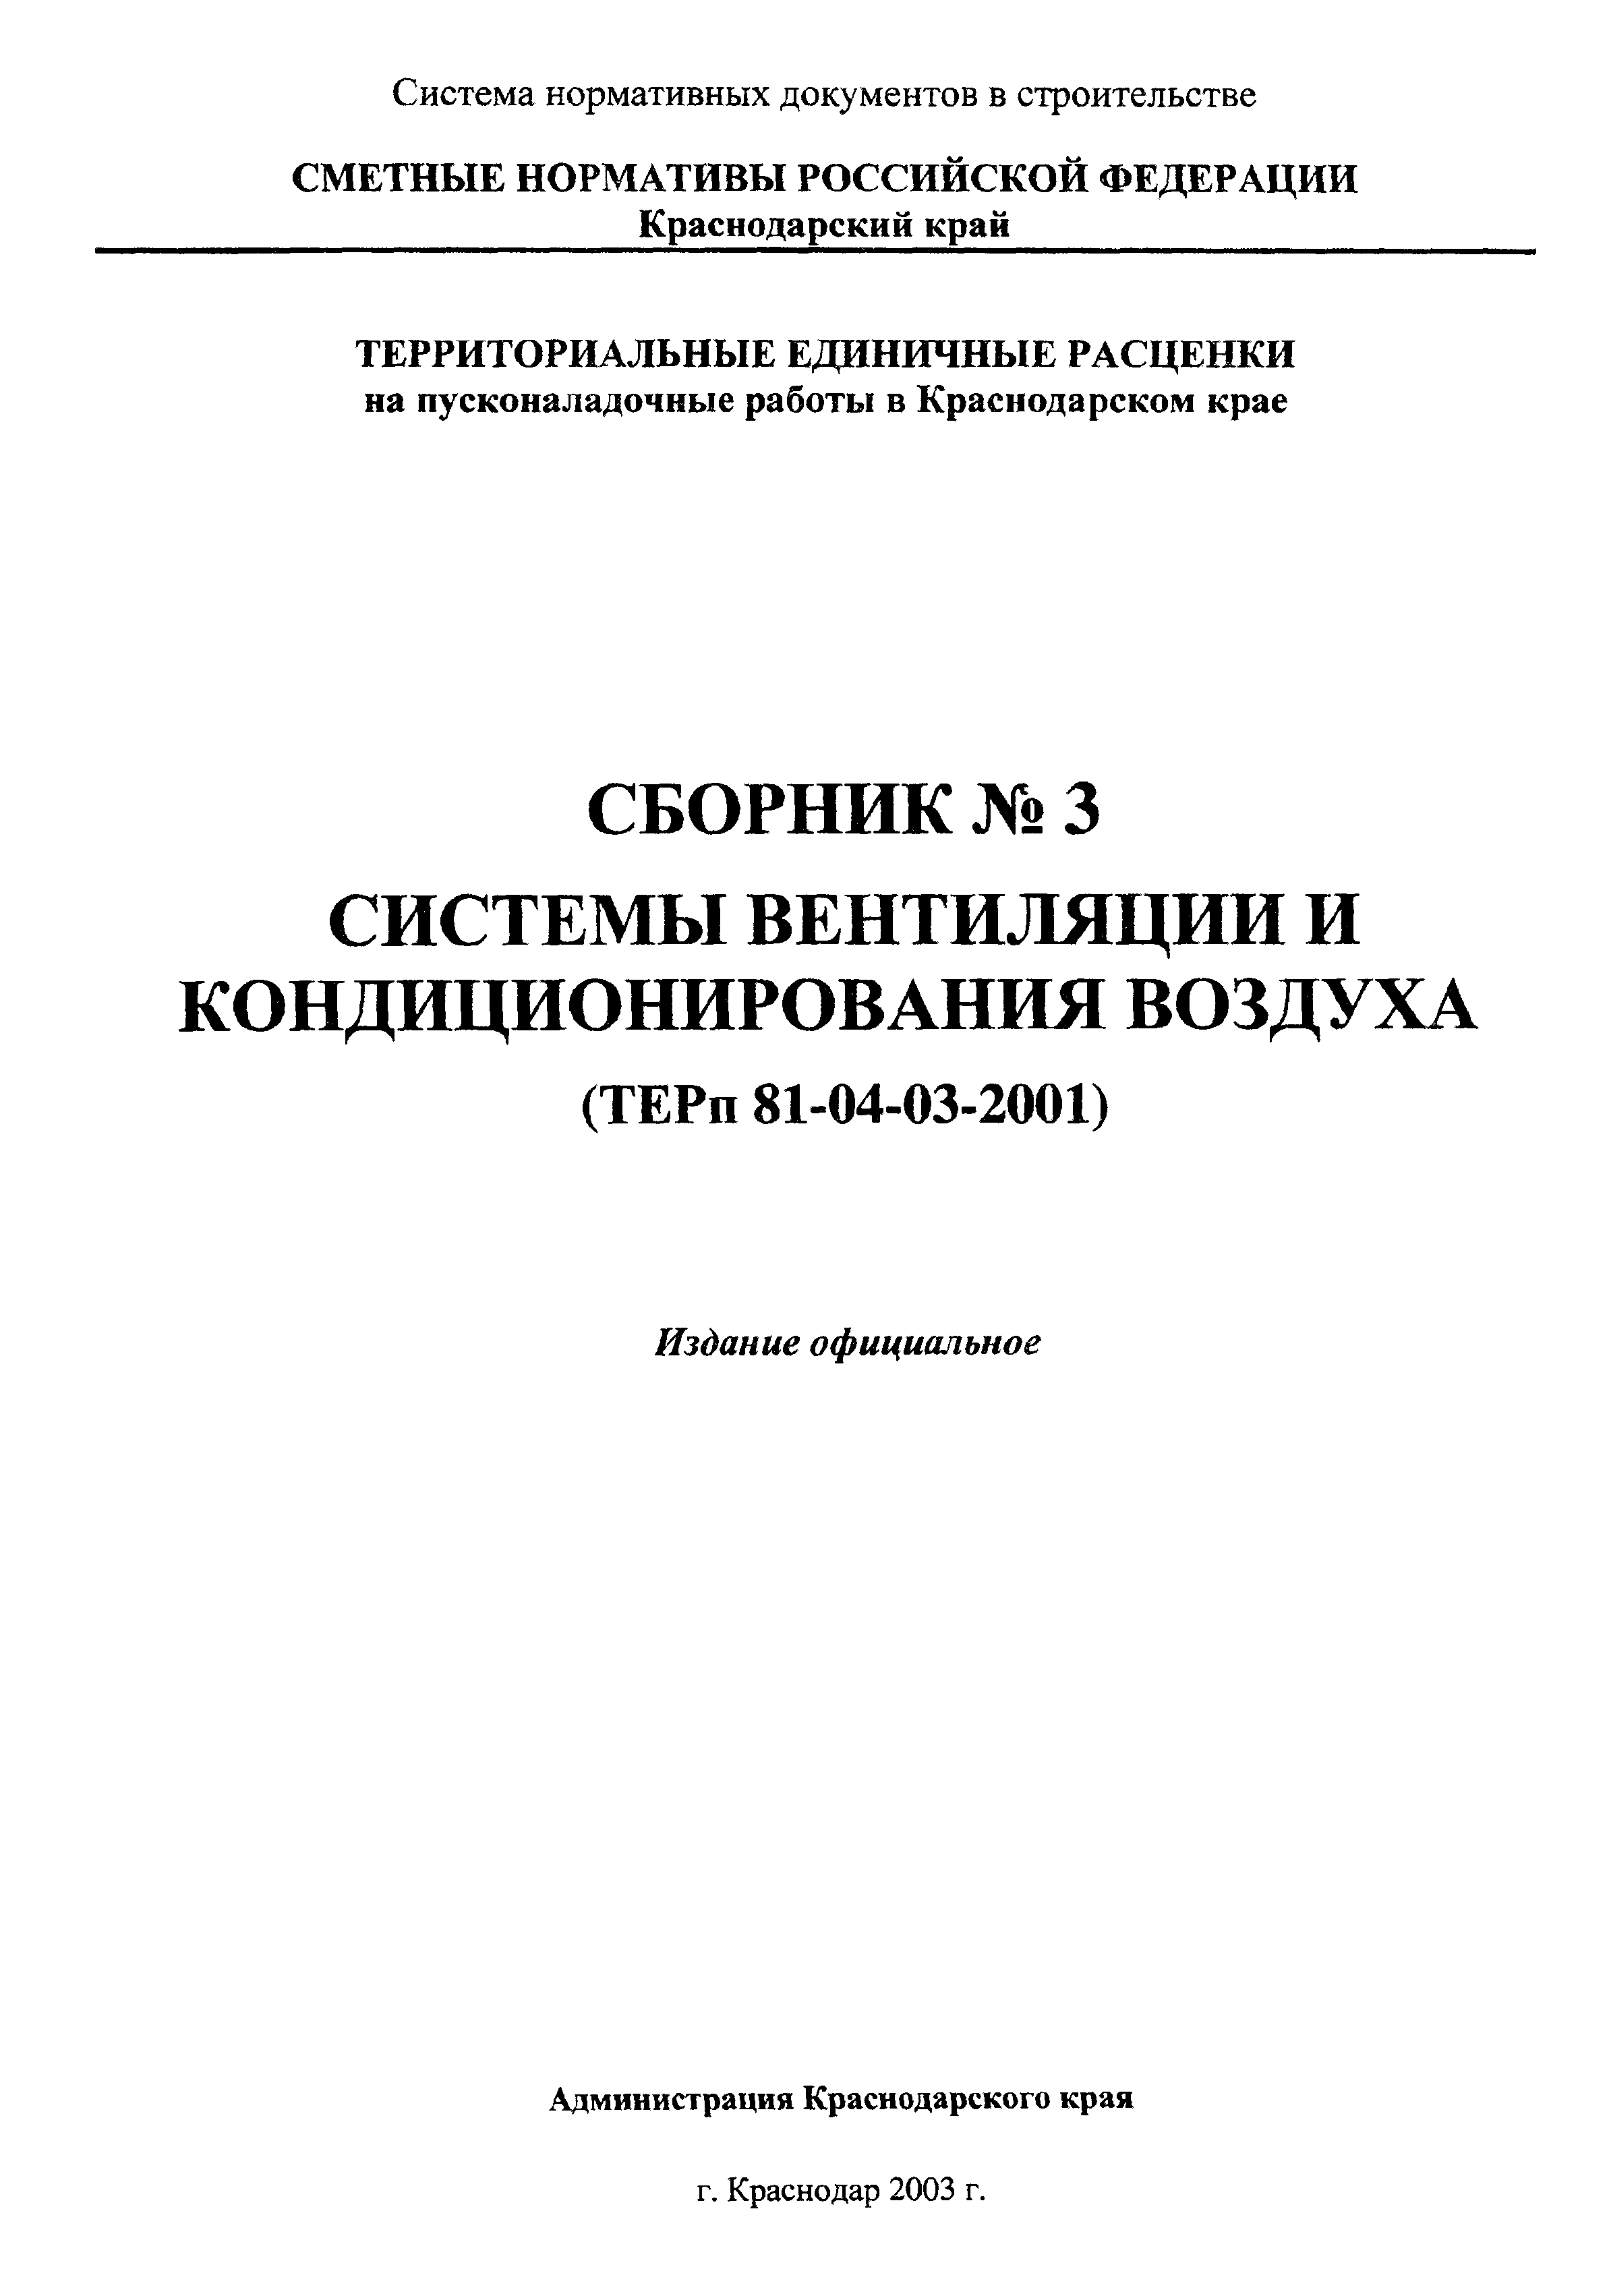 ТЕРп Краснодарский край 2001-03